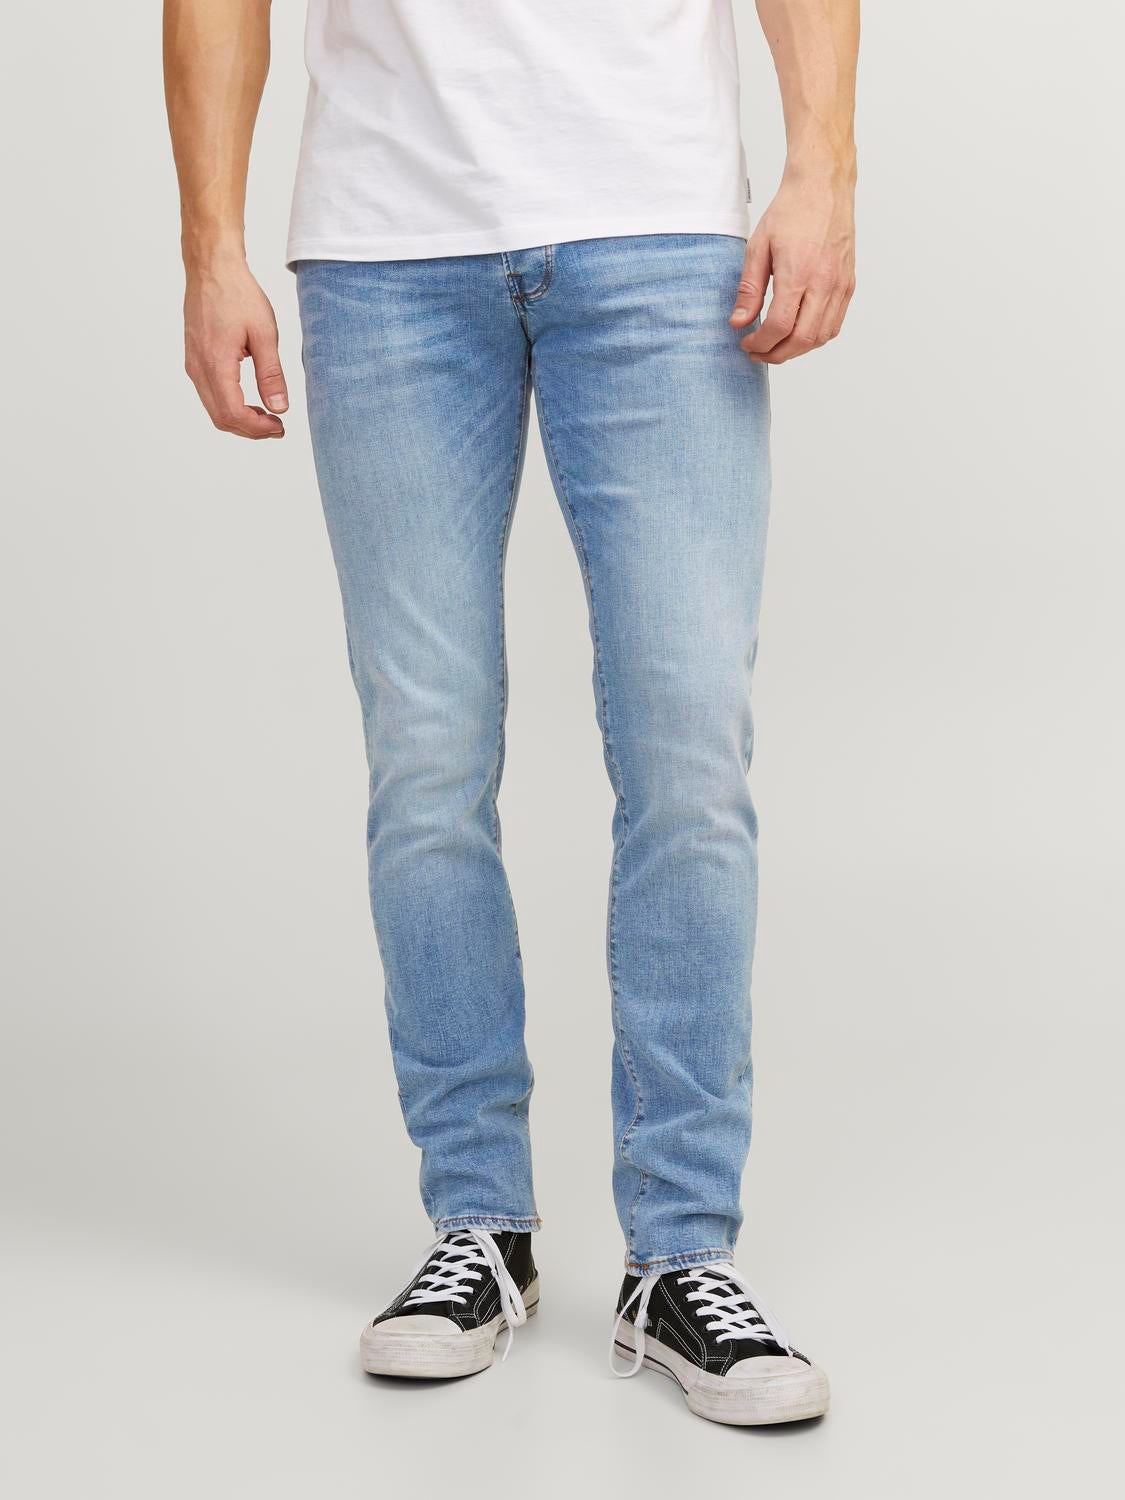 H&S Apparel - Men's Branded Denim Jeans - JACK & Jones -... | Facebook